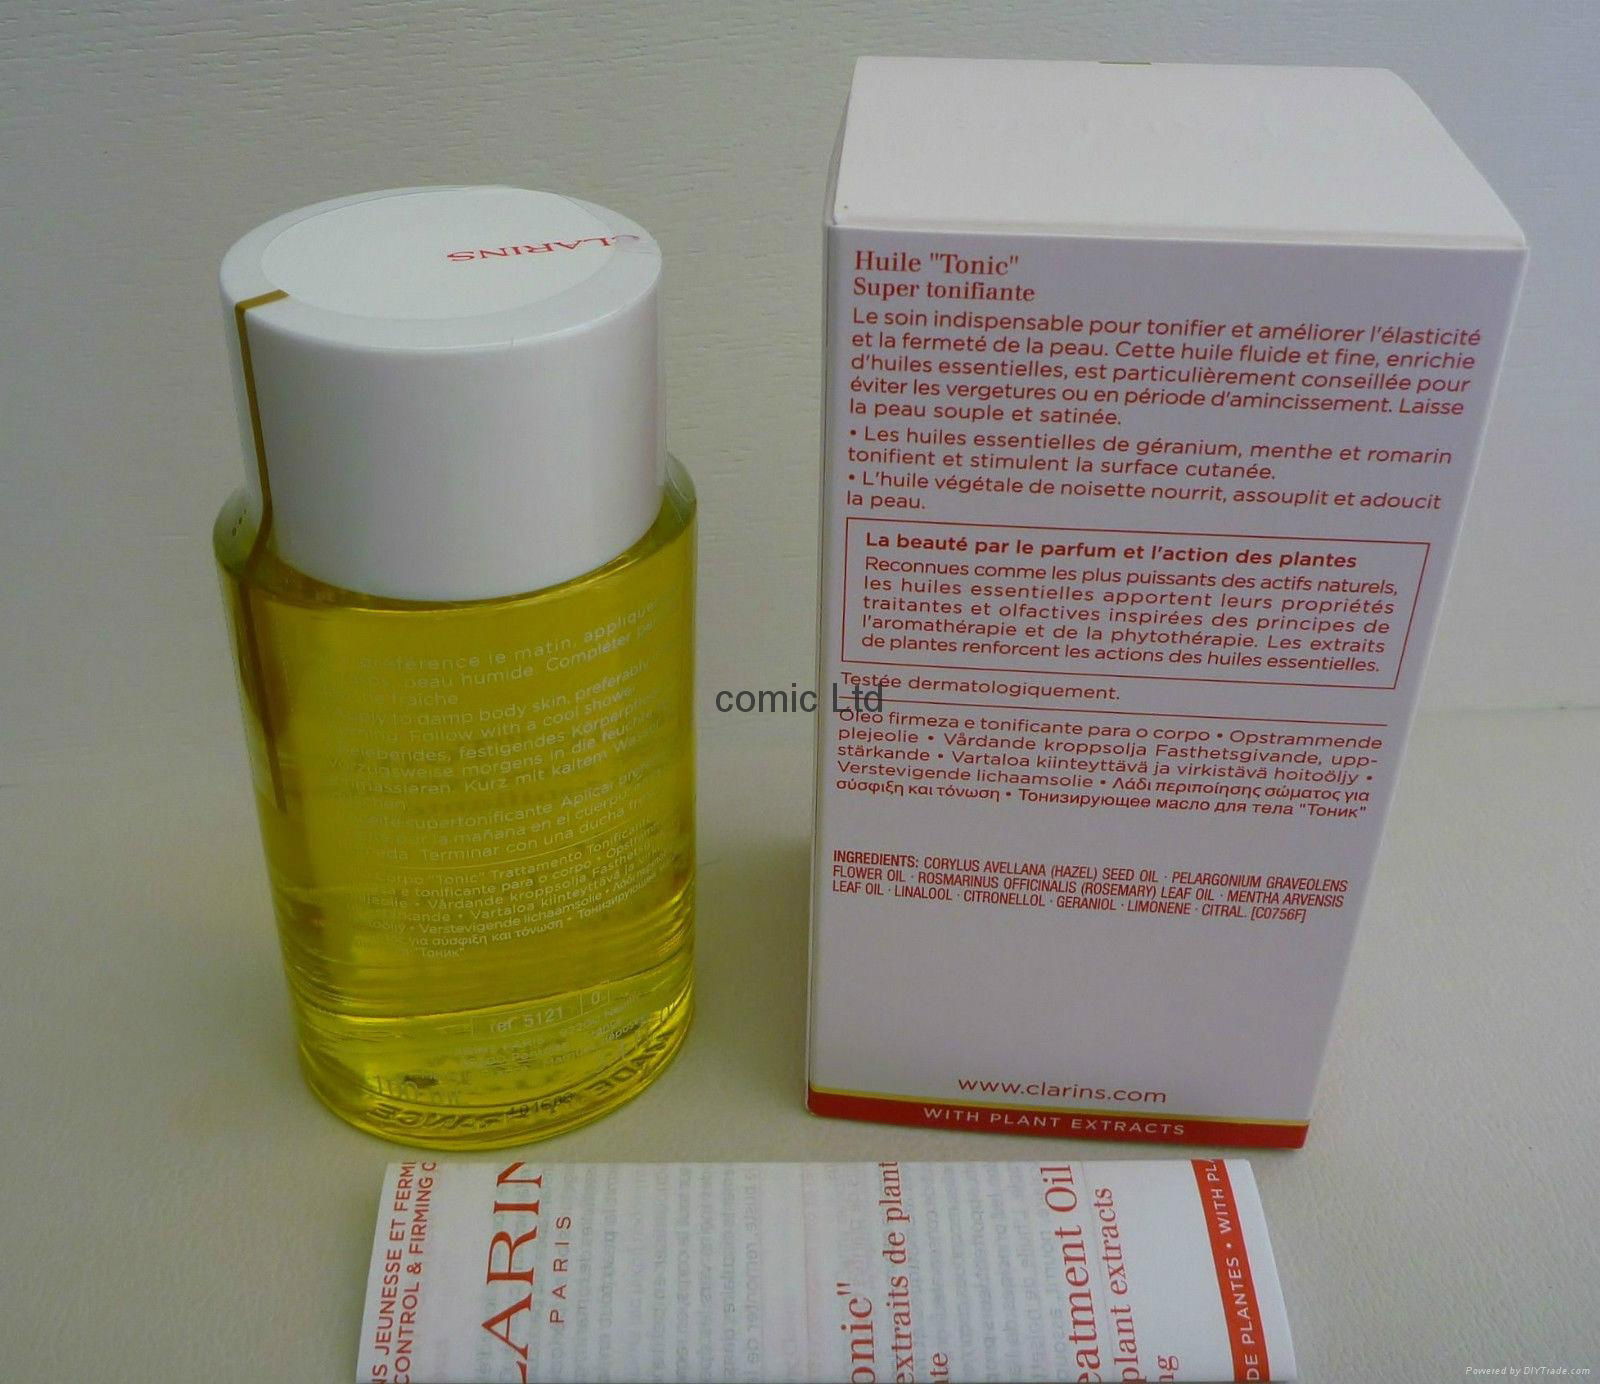  Clarins Tonic Body Treatment Oil, 1.0 Fl. Oz. 100% Pure  2